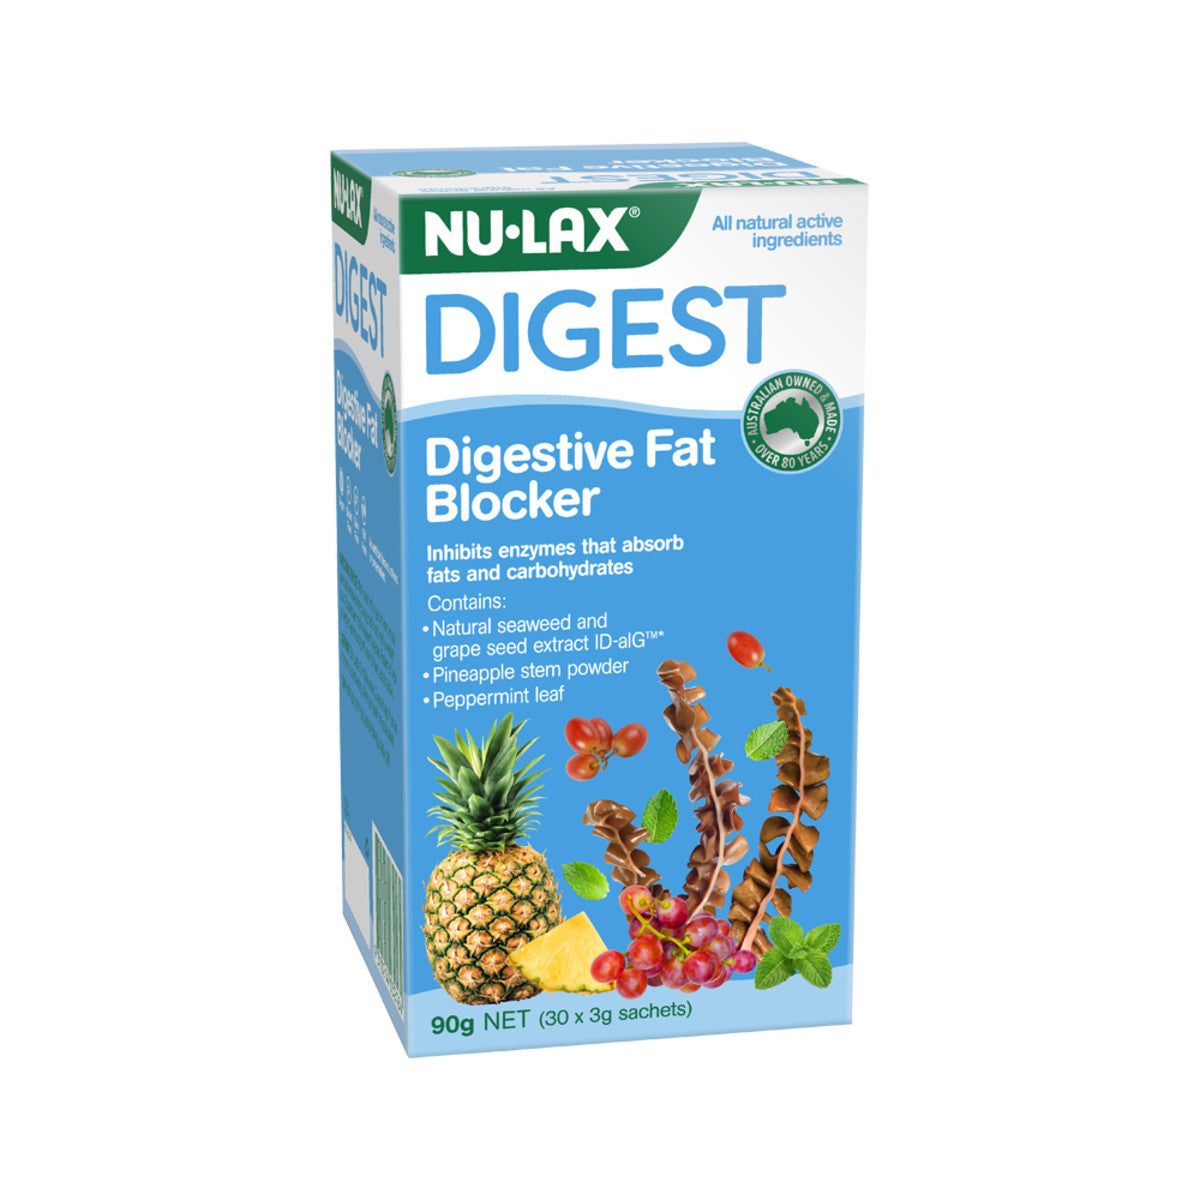 NuLax Digest Digestive Fat Blocker Sachets 3g x 30 Pack